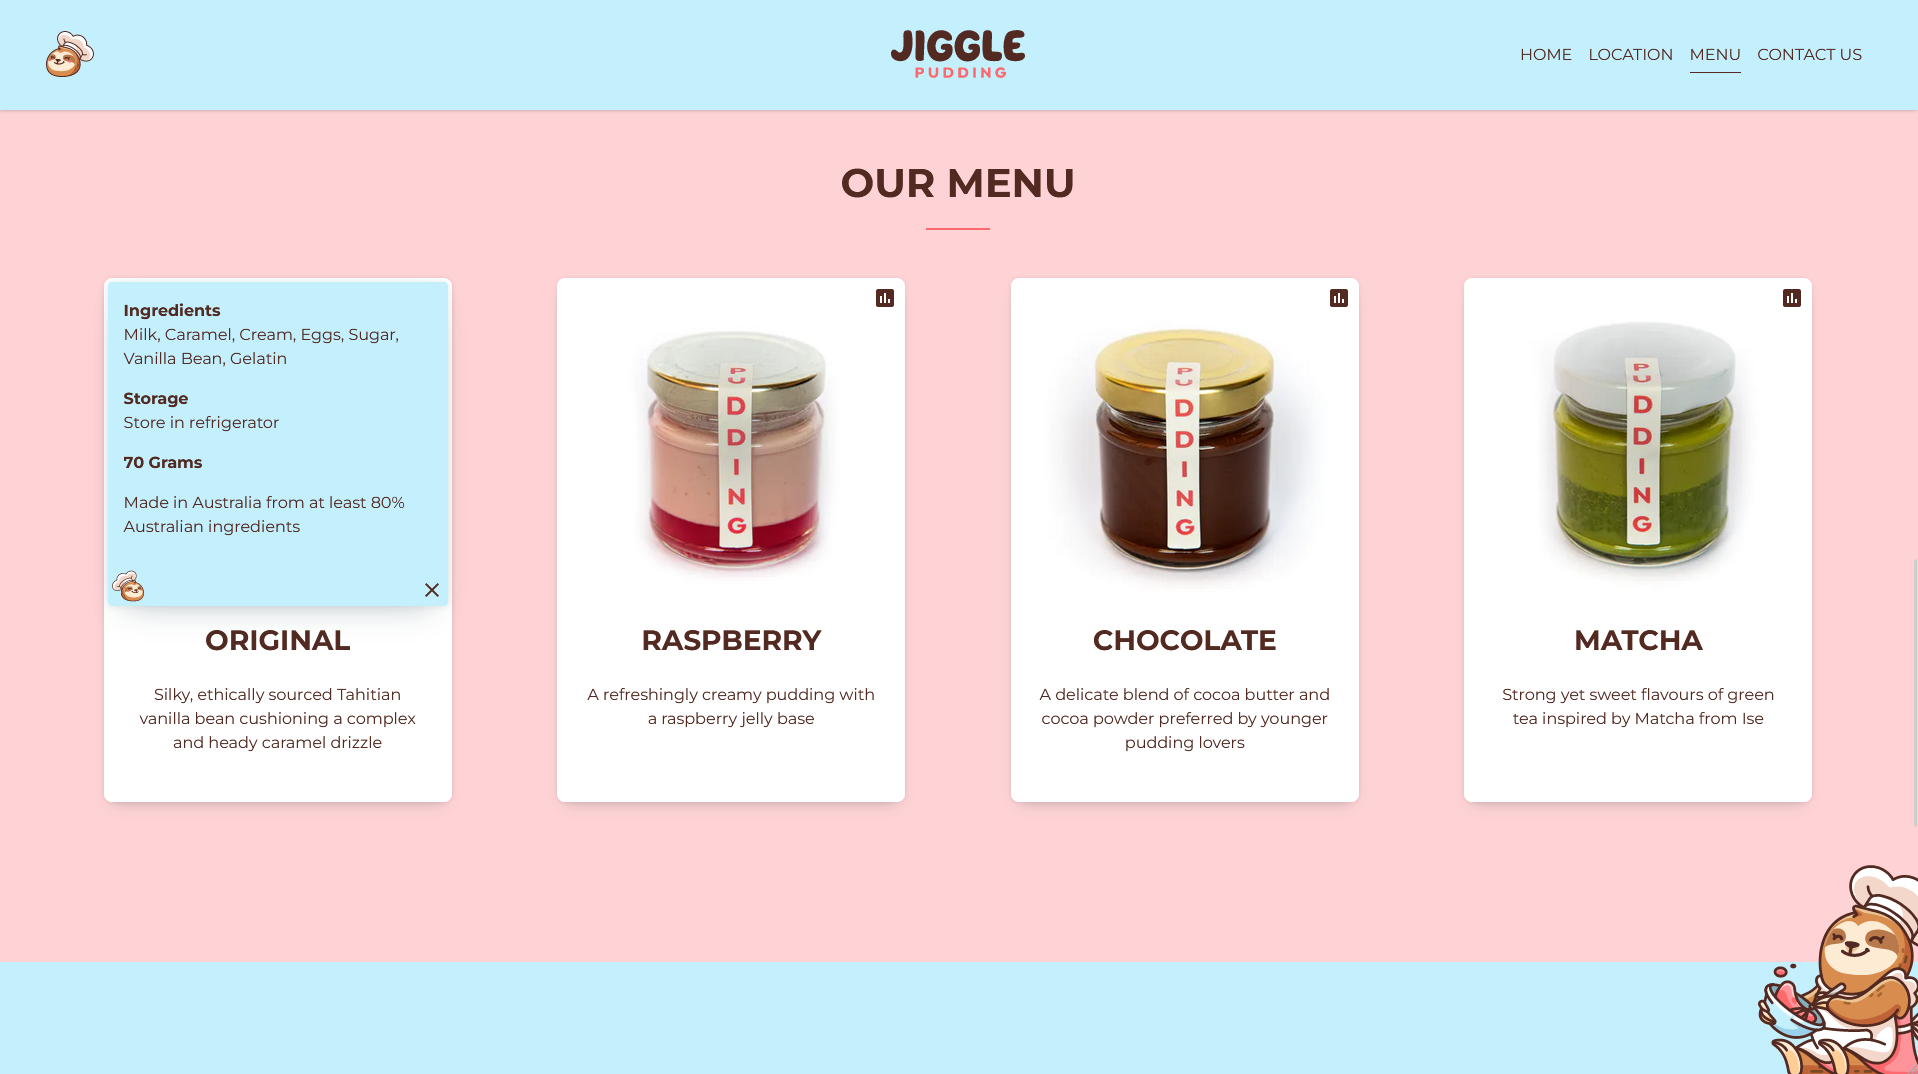 The menu of Jiggle Pudding